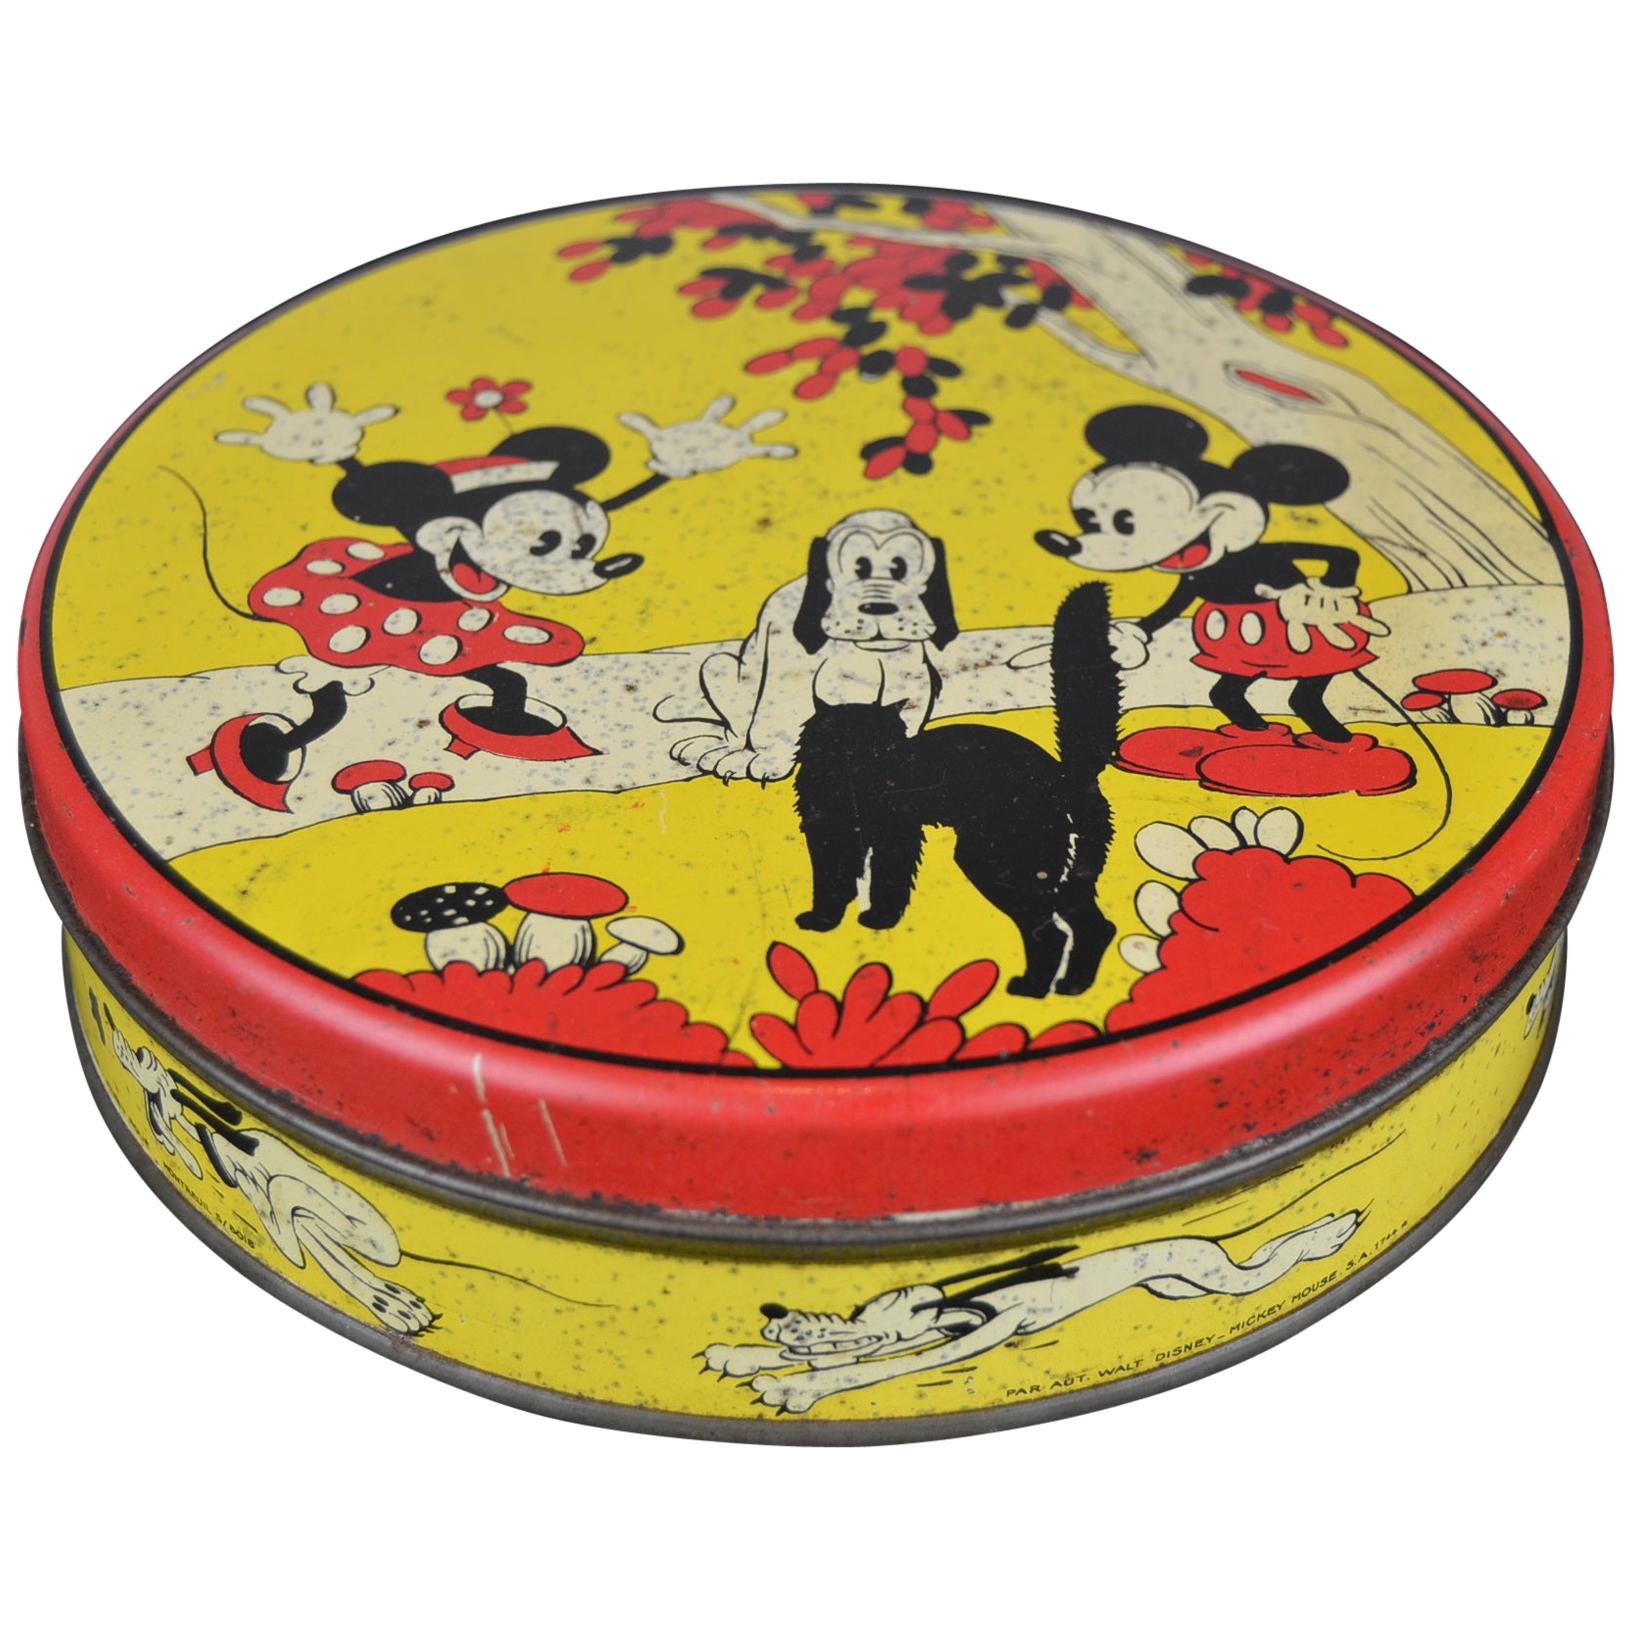 Lata Walt Disney de 1930 con Mickey Mouse, Minnie Mouse, Pluto y Gato